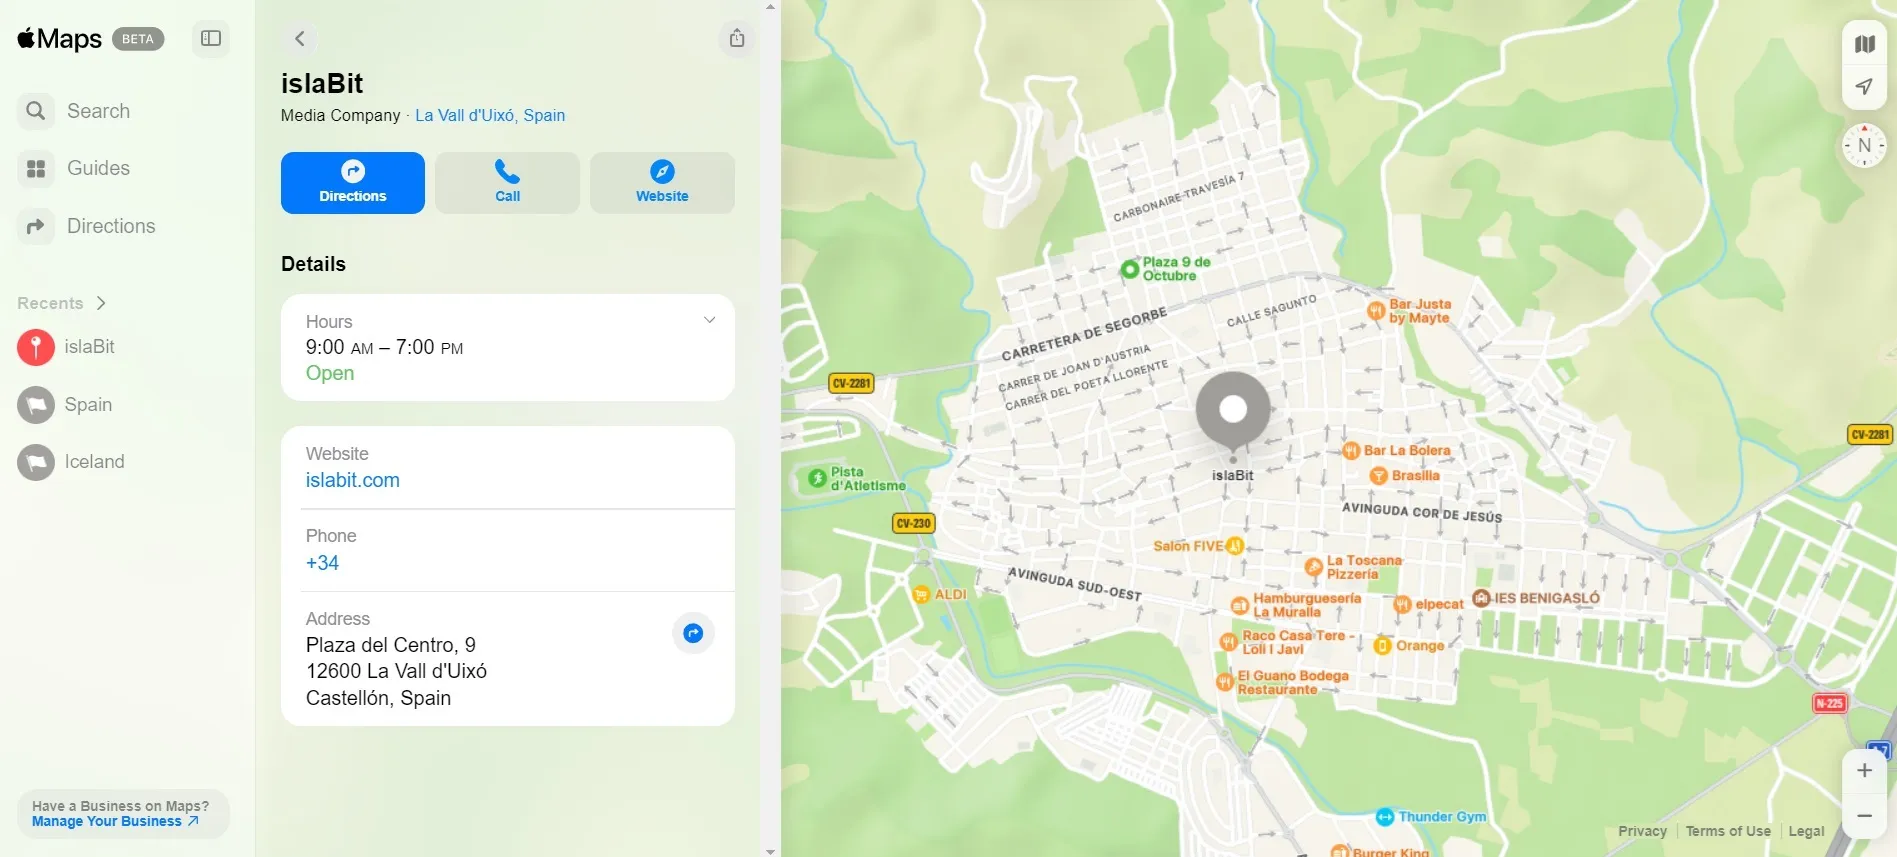 apple maps web beta - islaBit